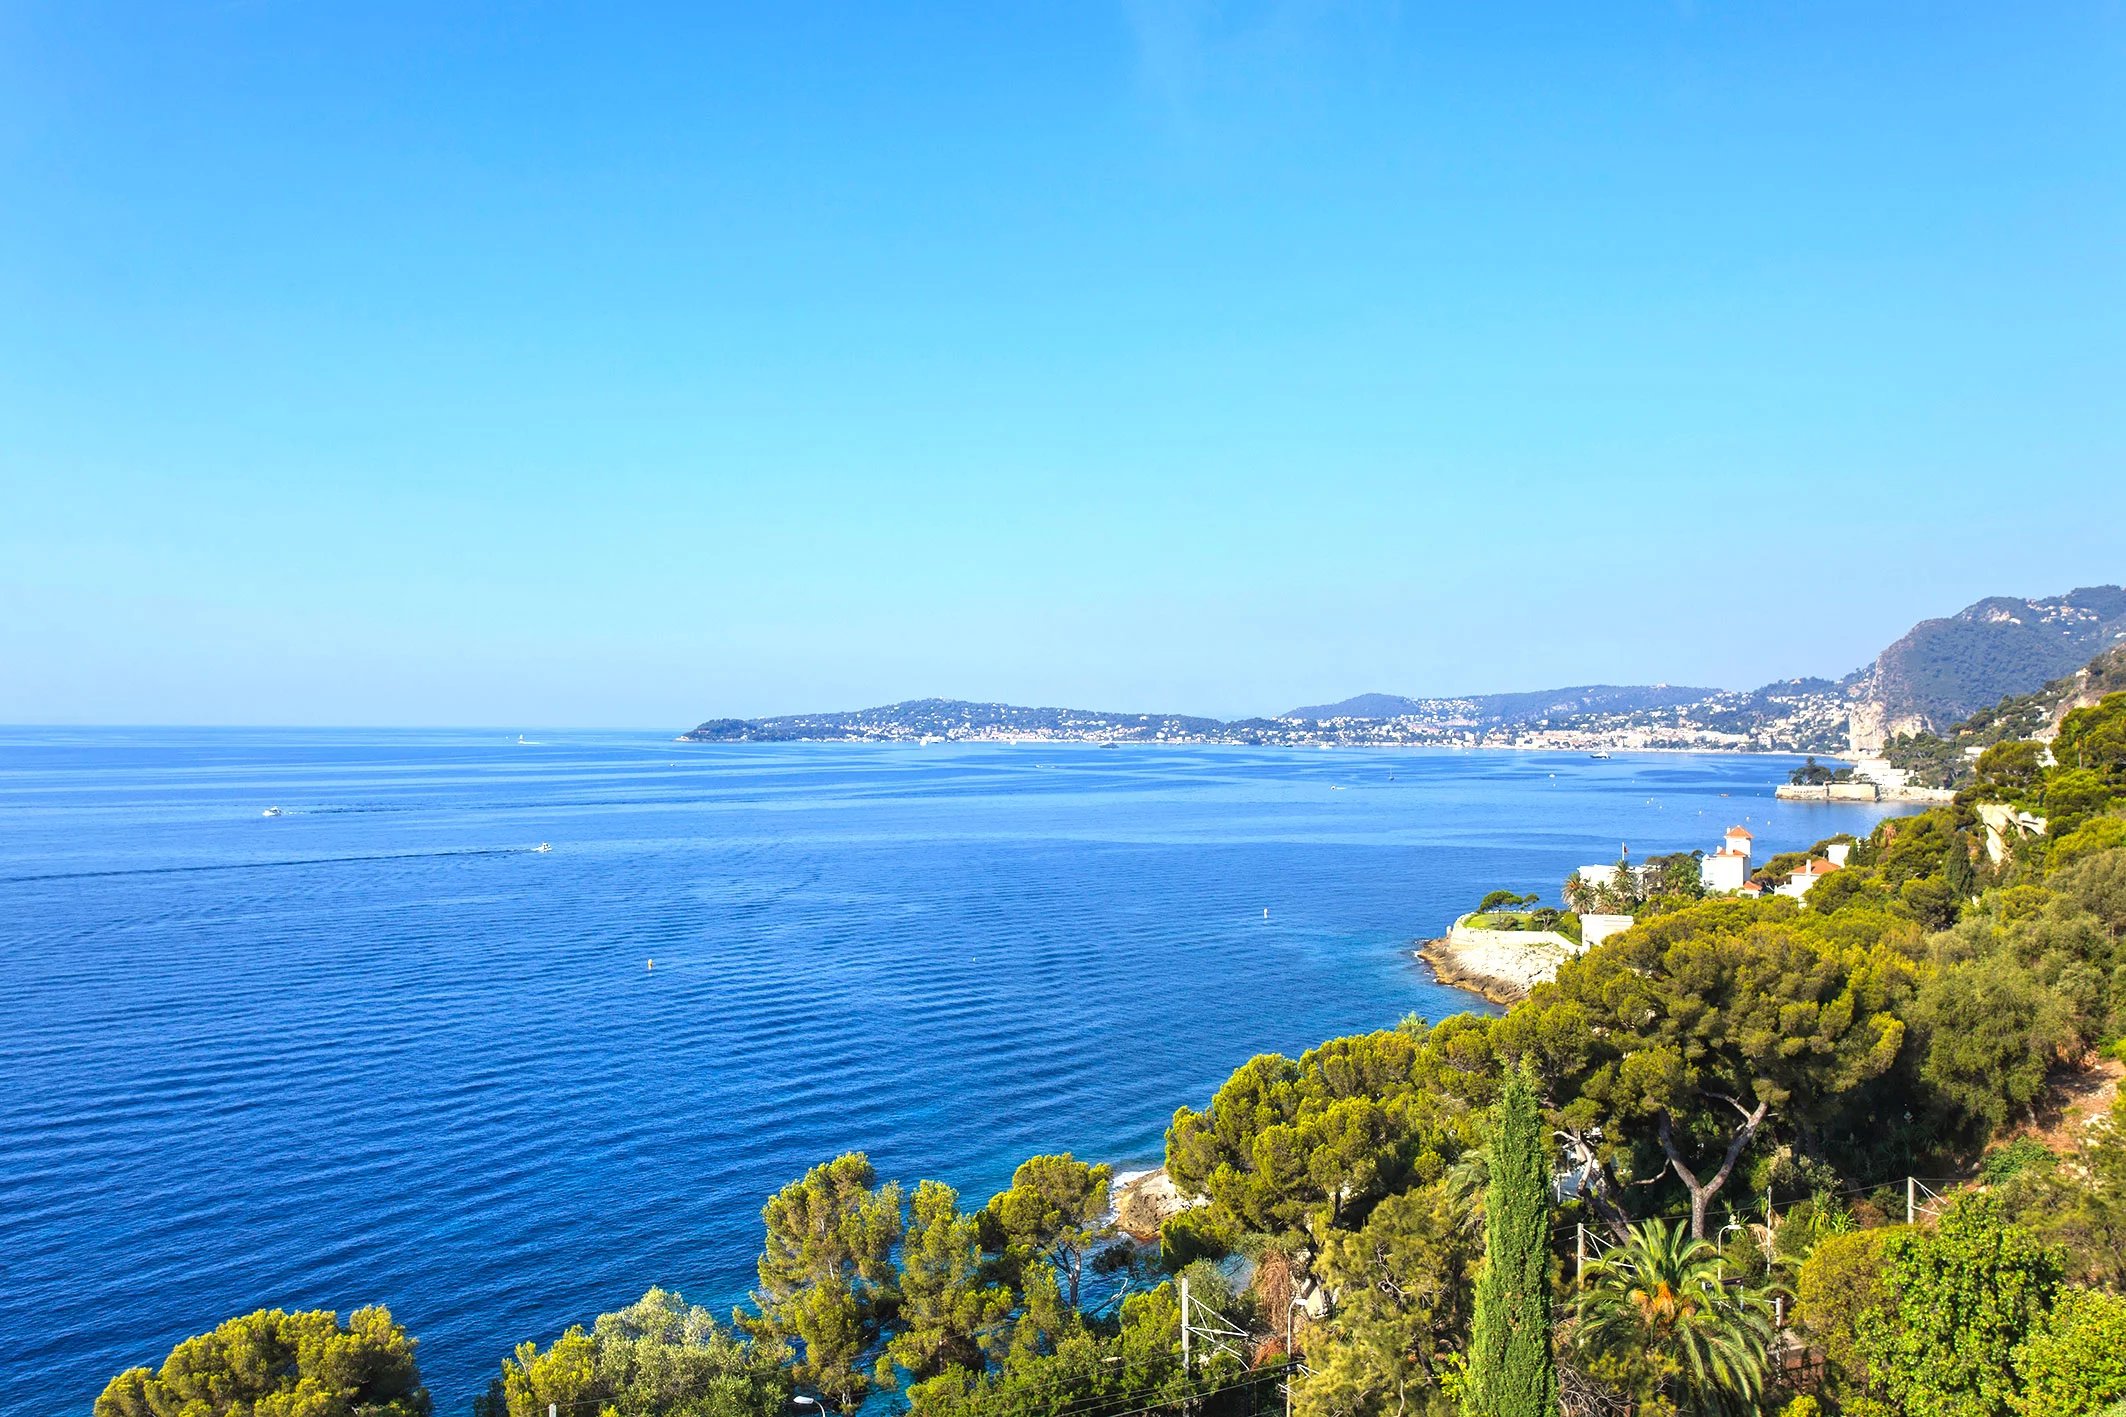 Sale Villa Cap d'Ail - Sea View